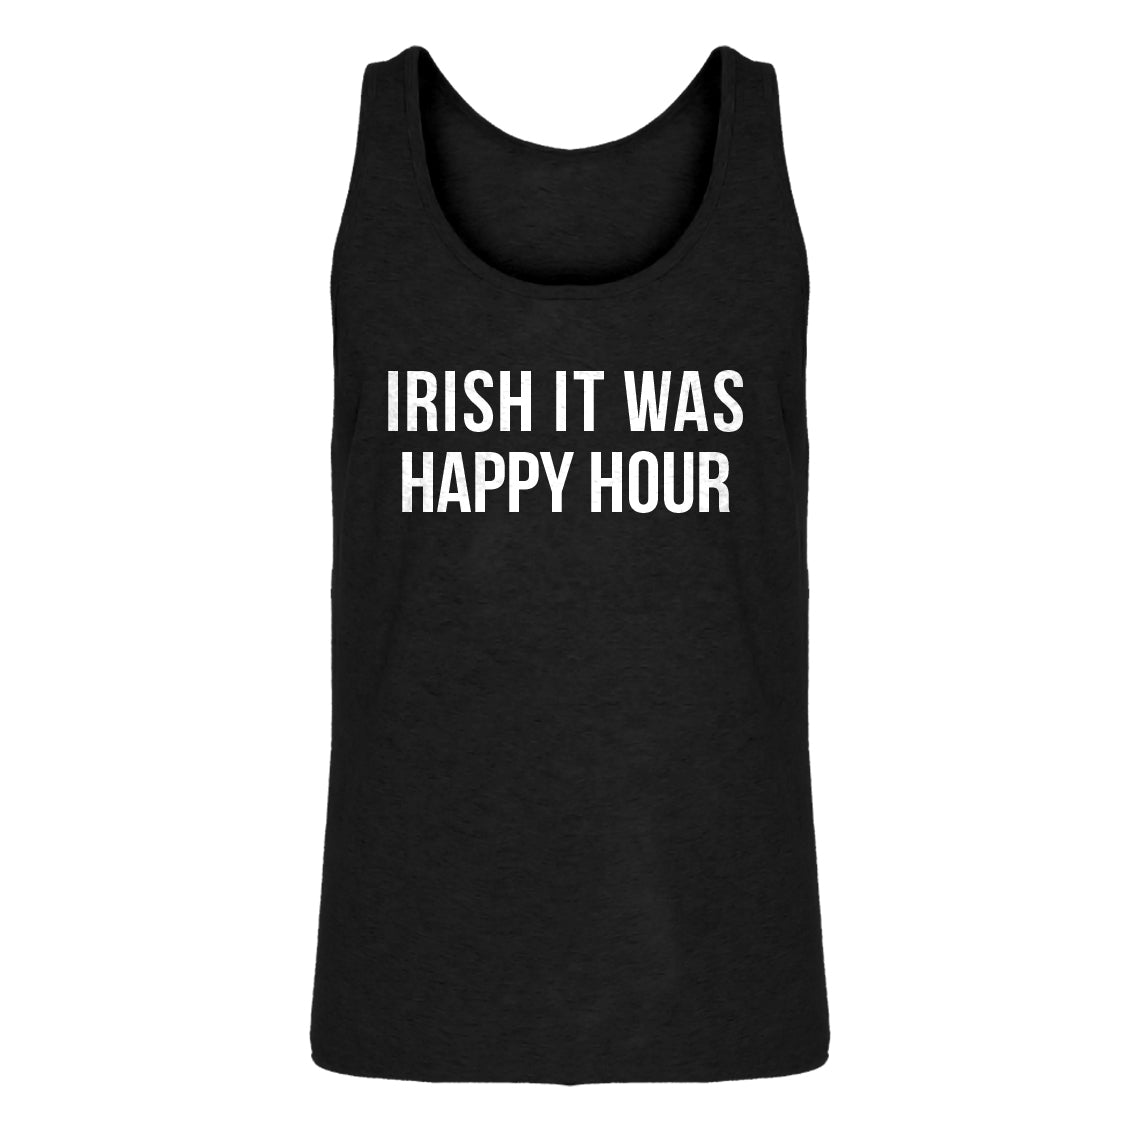 Mens Irish it were Happy Hour Jersey Tank Top